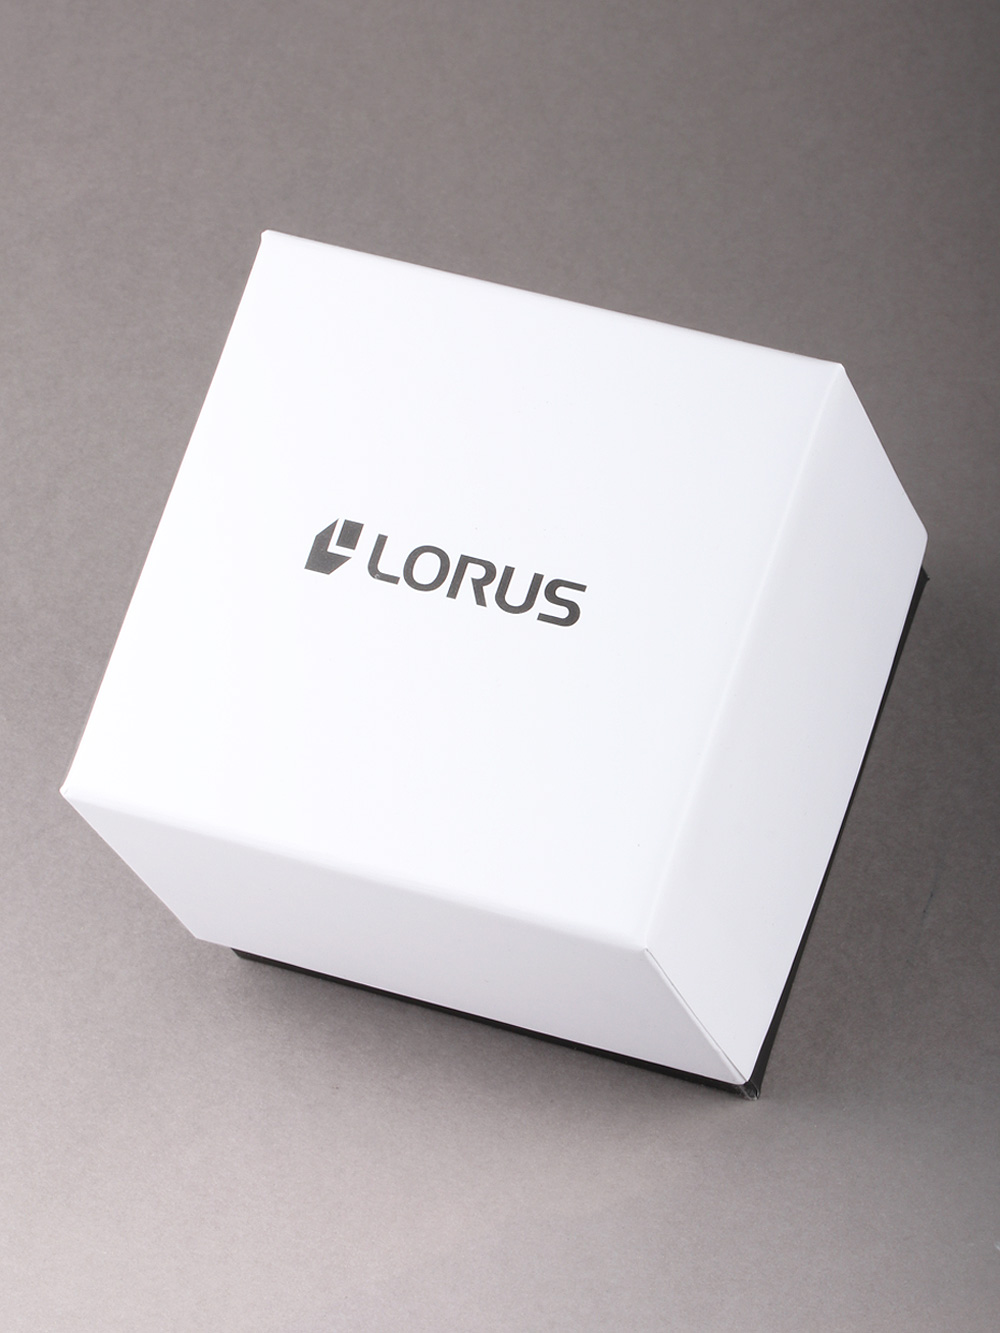 Lorus RH947PX9